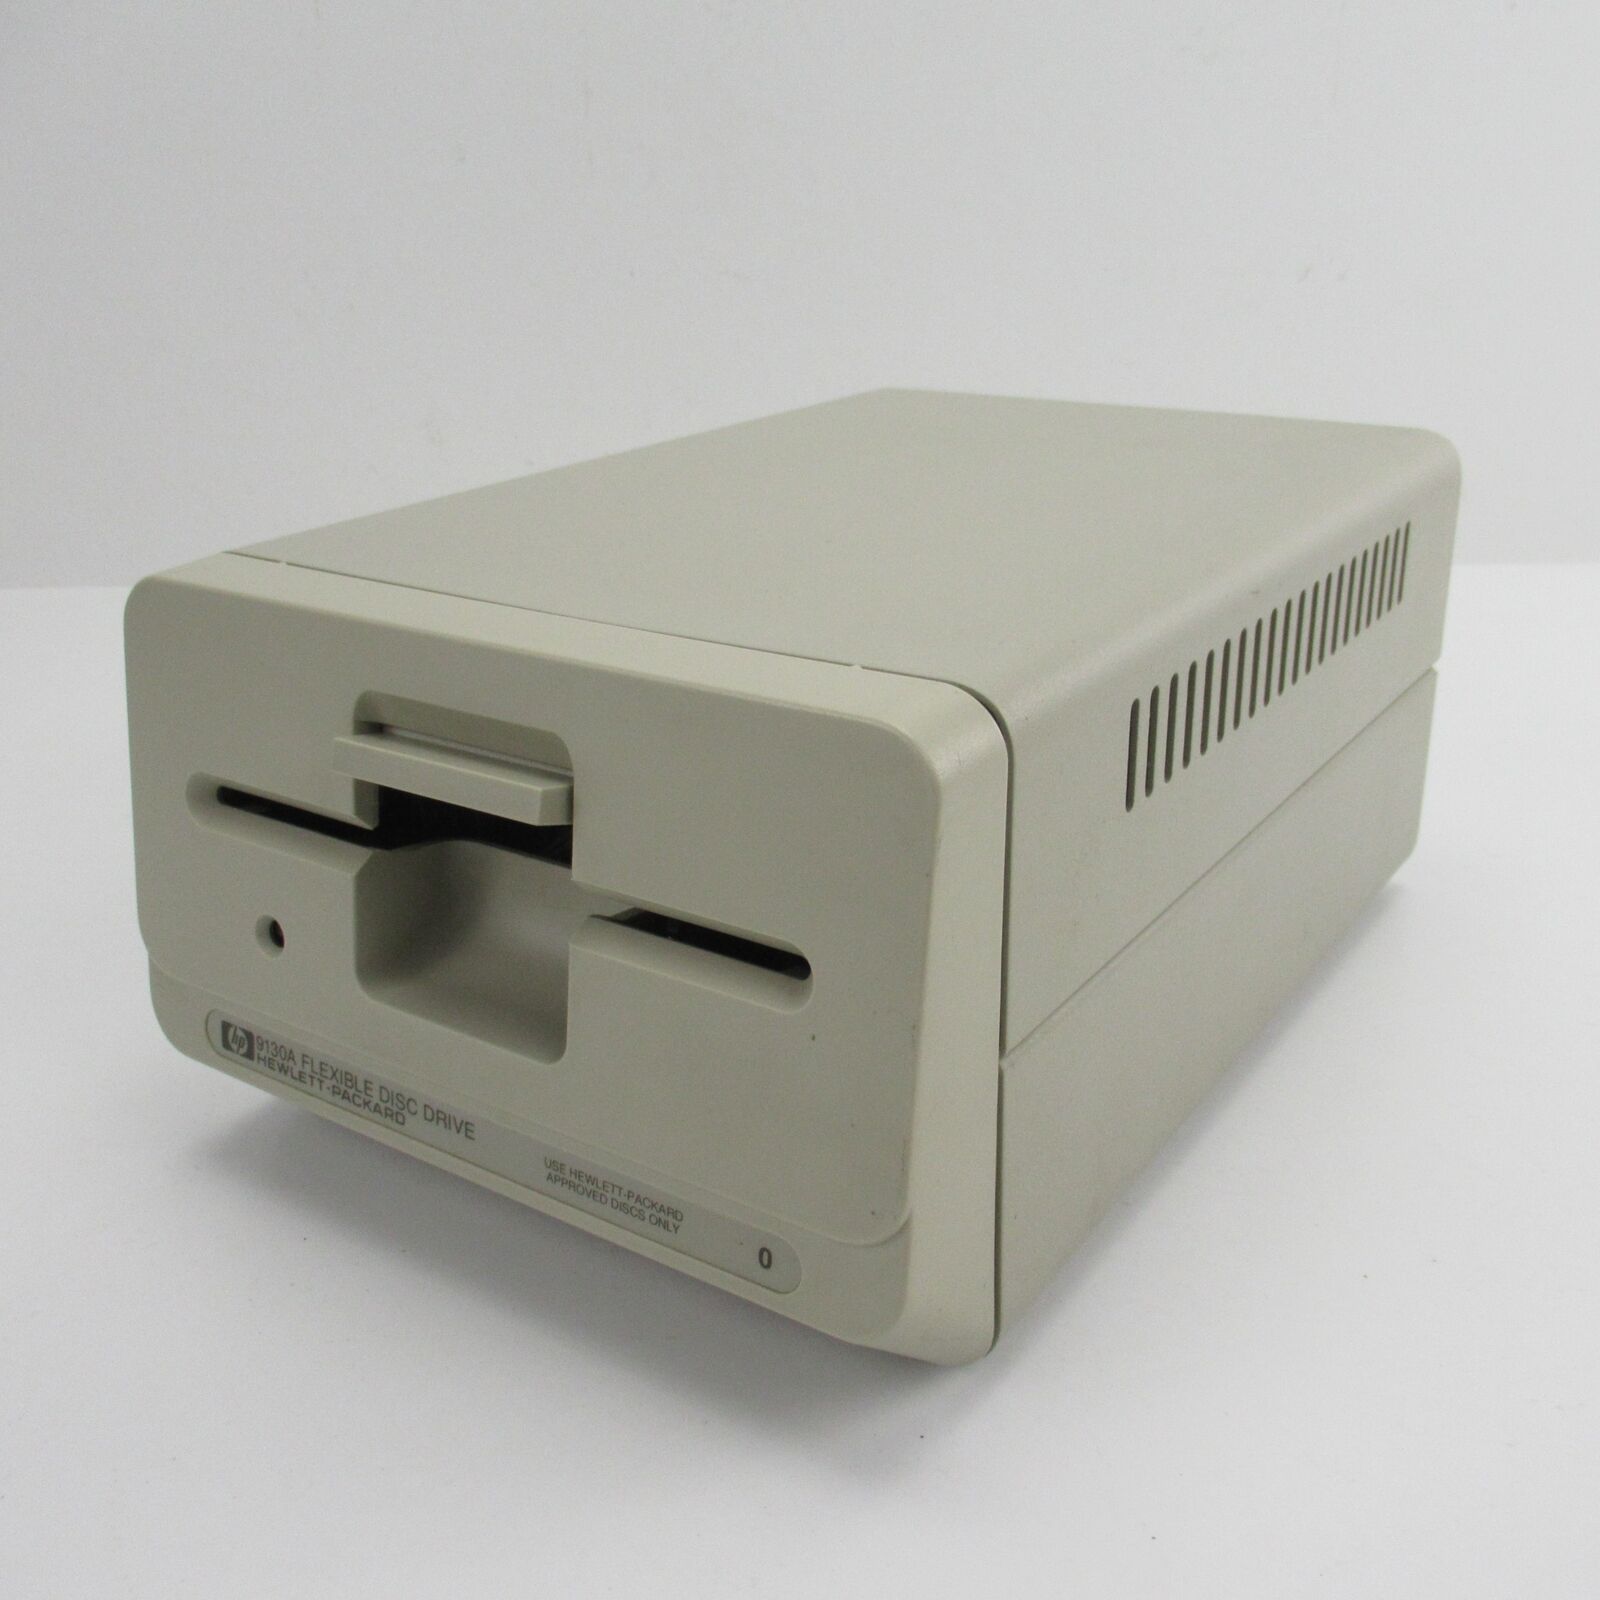 HEWLETT PACKARD 9130A 5.25 FLOPPY/FLEXIBLE DISC DRIVE FOR HP 86A VNTAGE COMPUTER